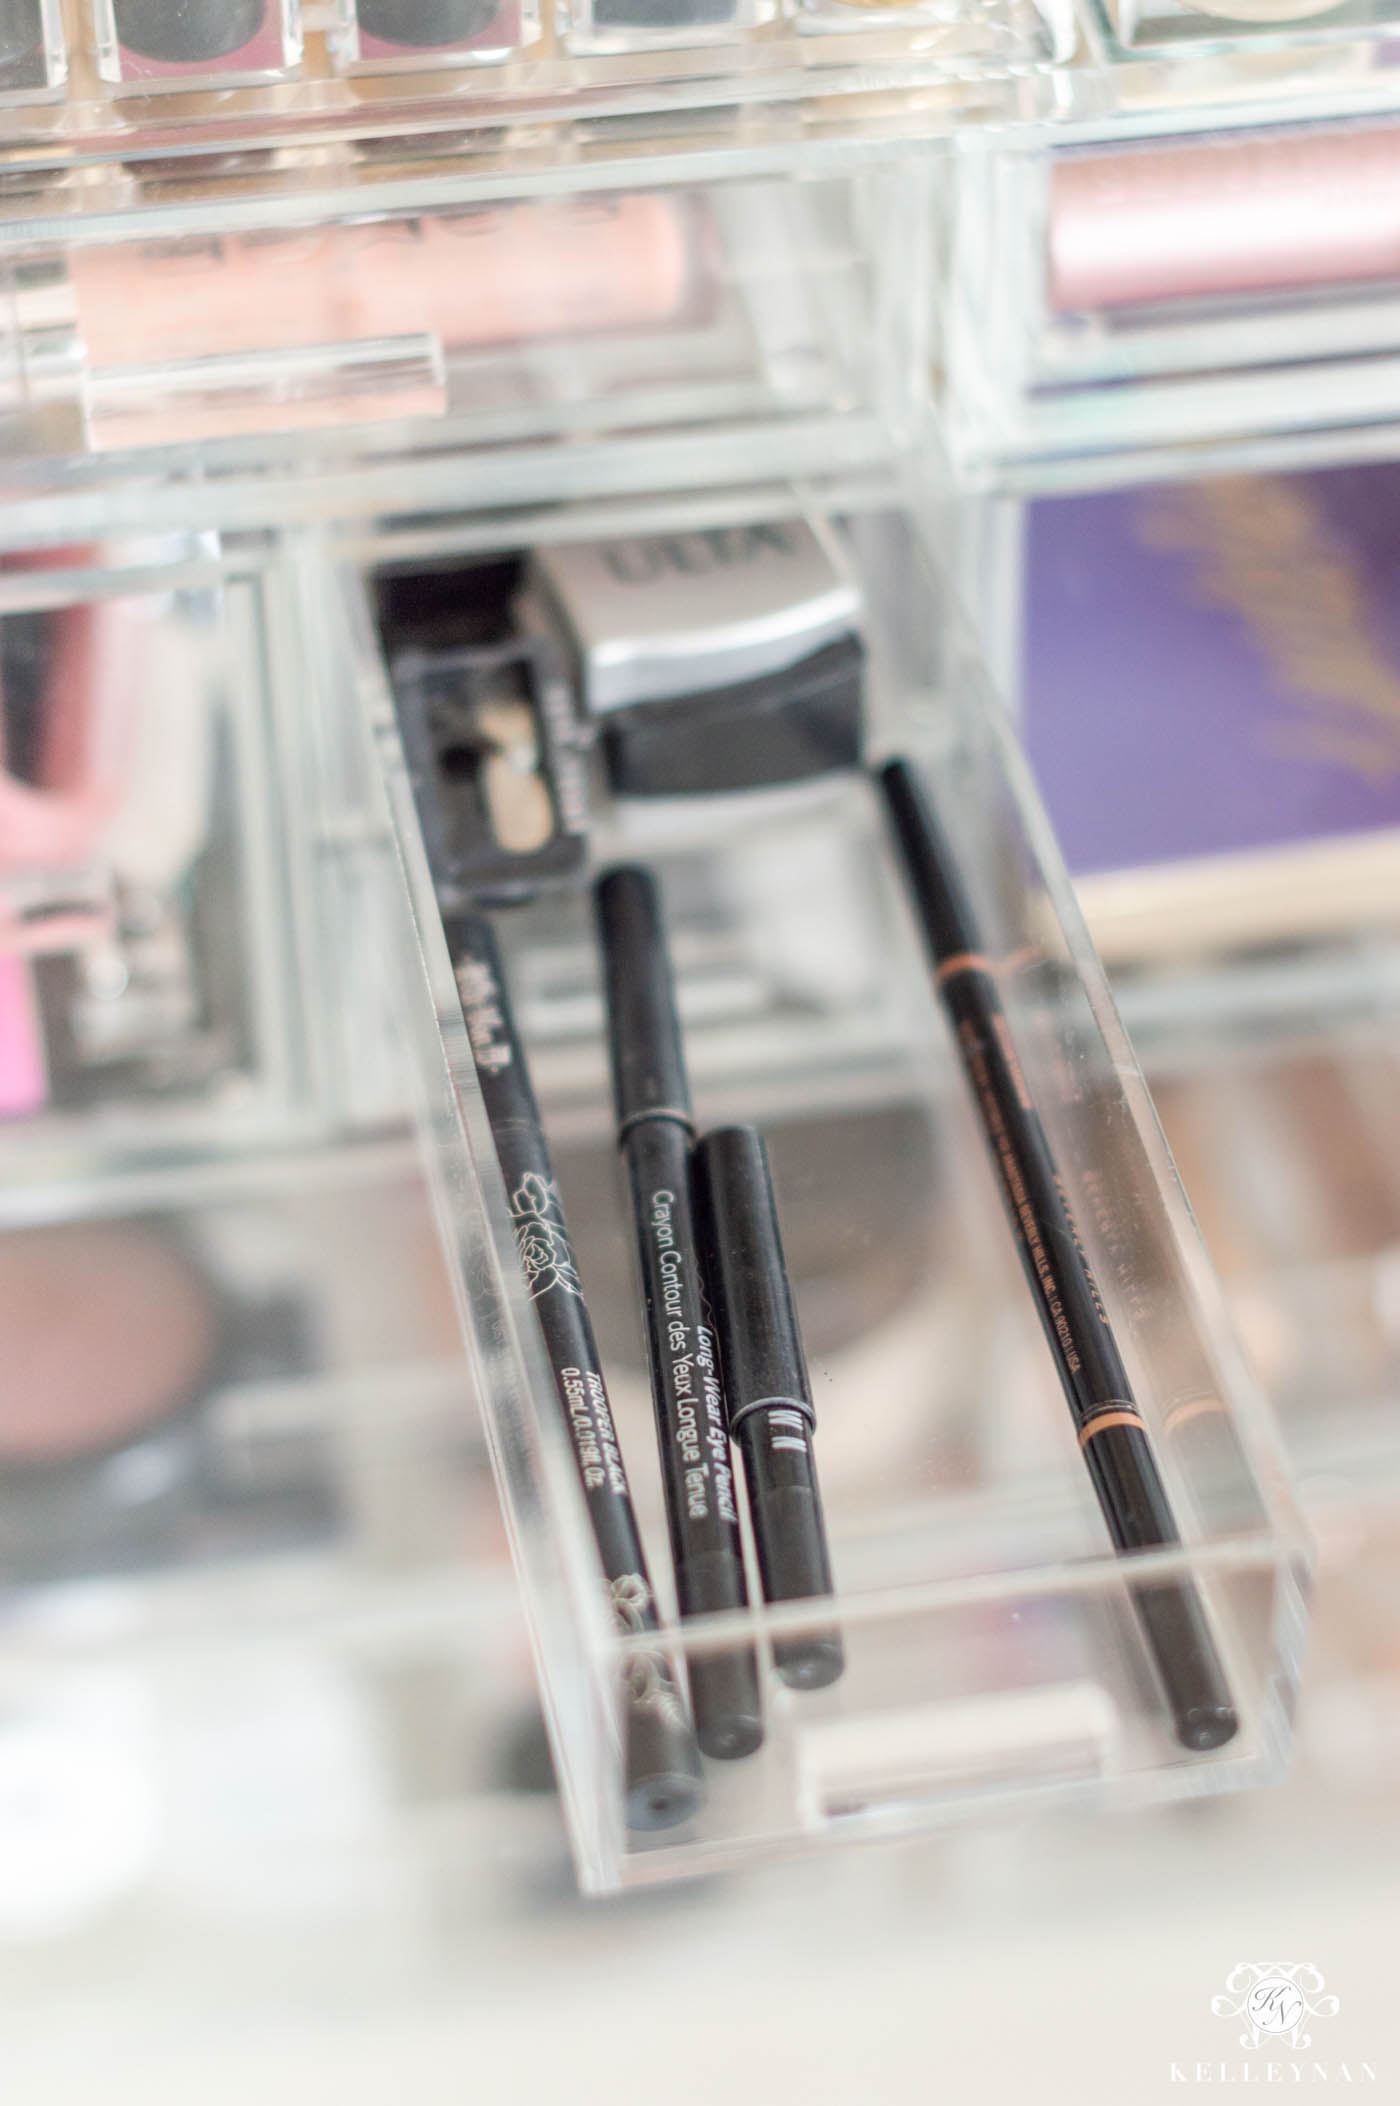 Acrylic Makeup Organizer and Storage Ideas